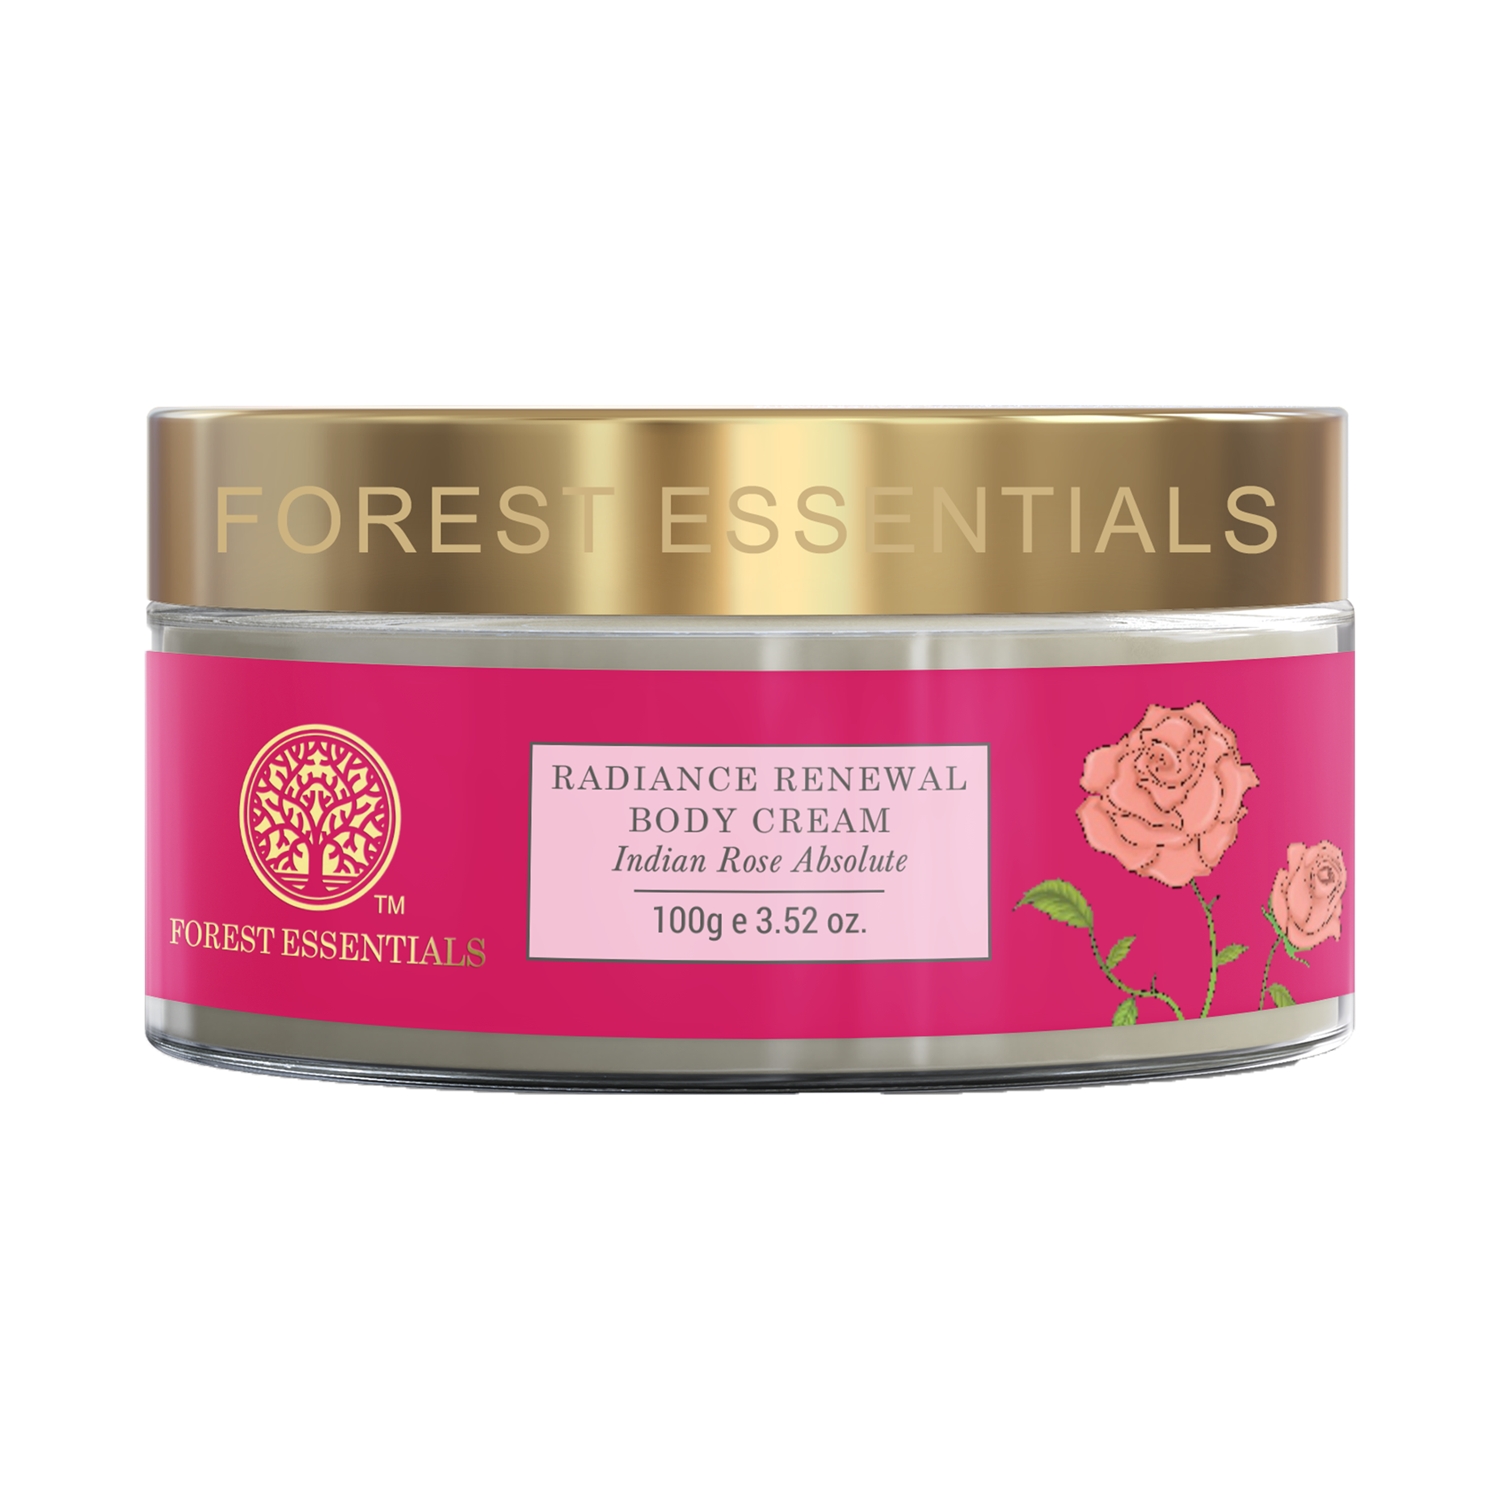 Forest Essentials | Forest Essentials Indian Rose Absolute Radiance Renewal Body Cream (100g)